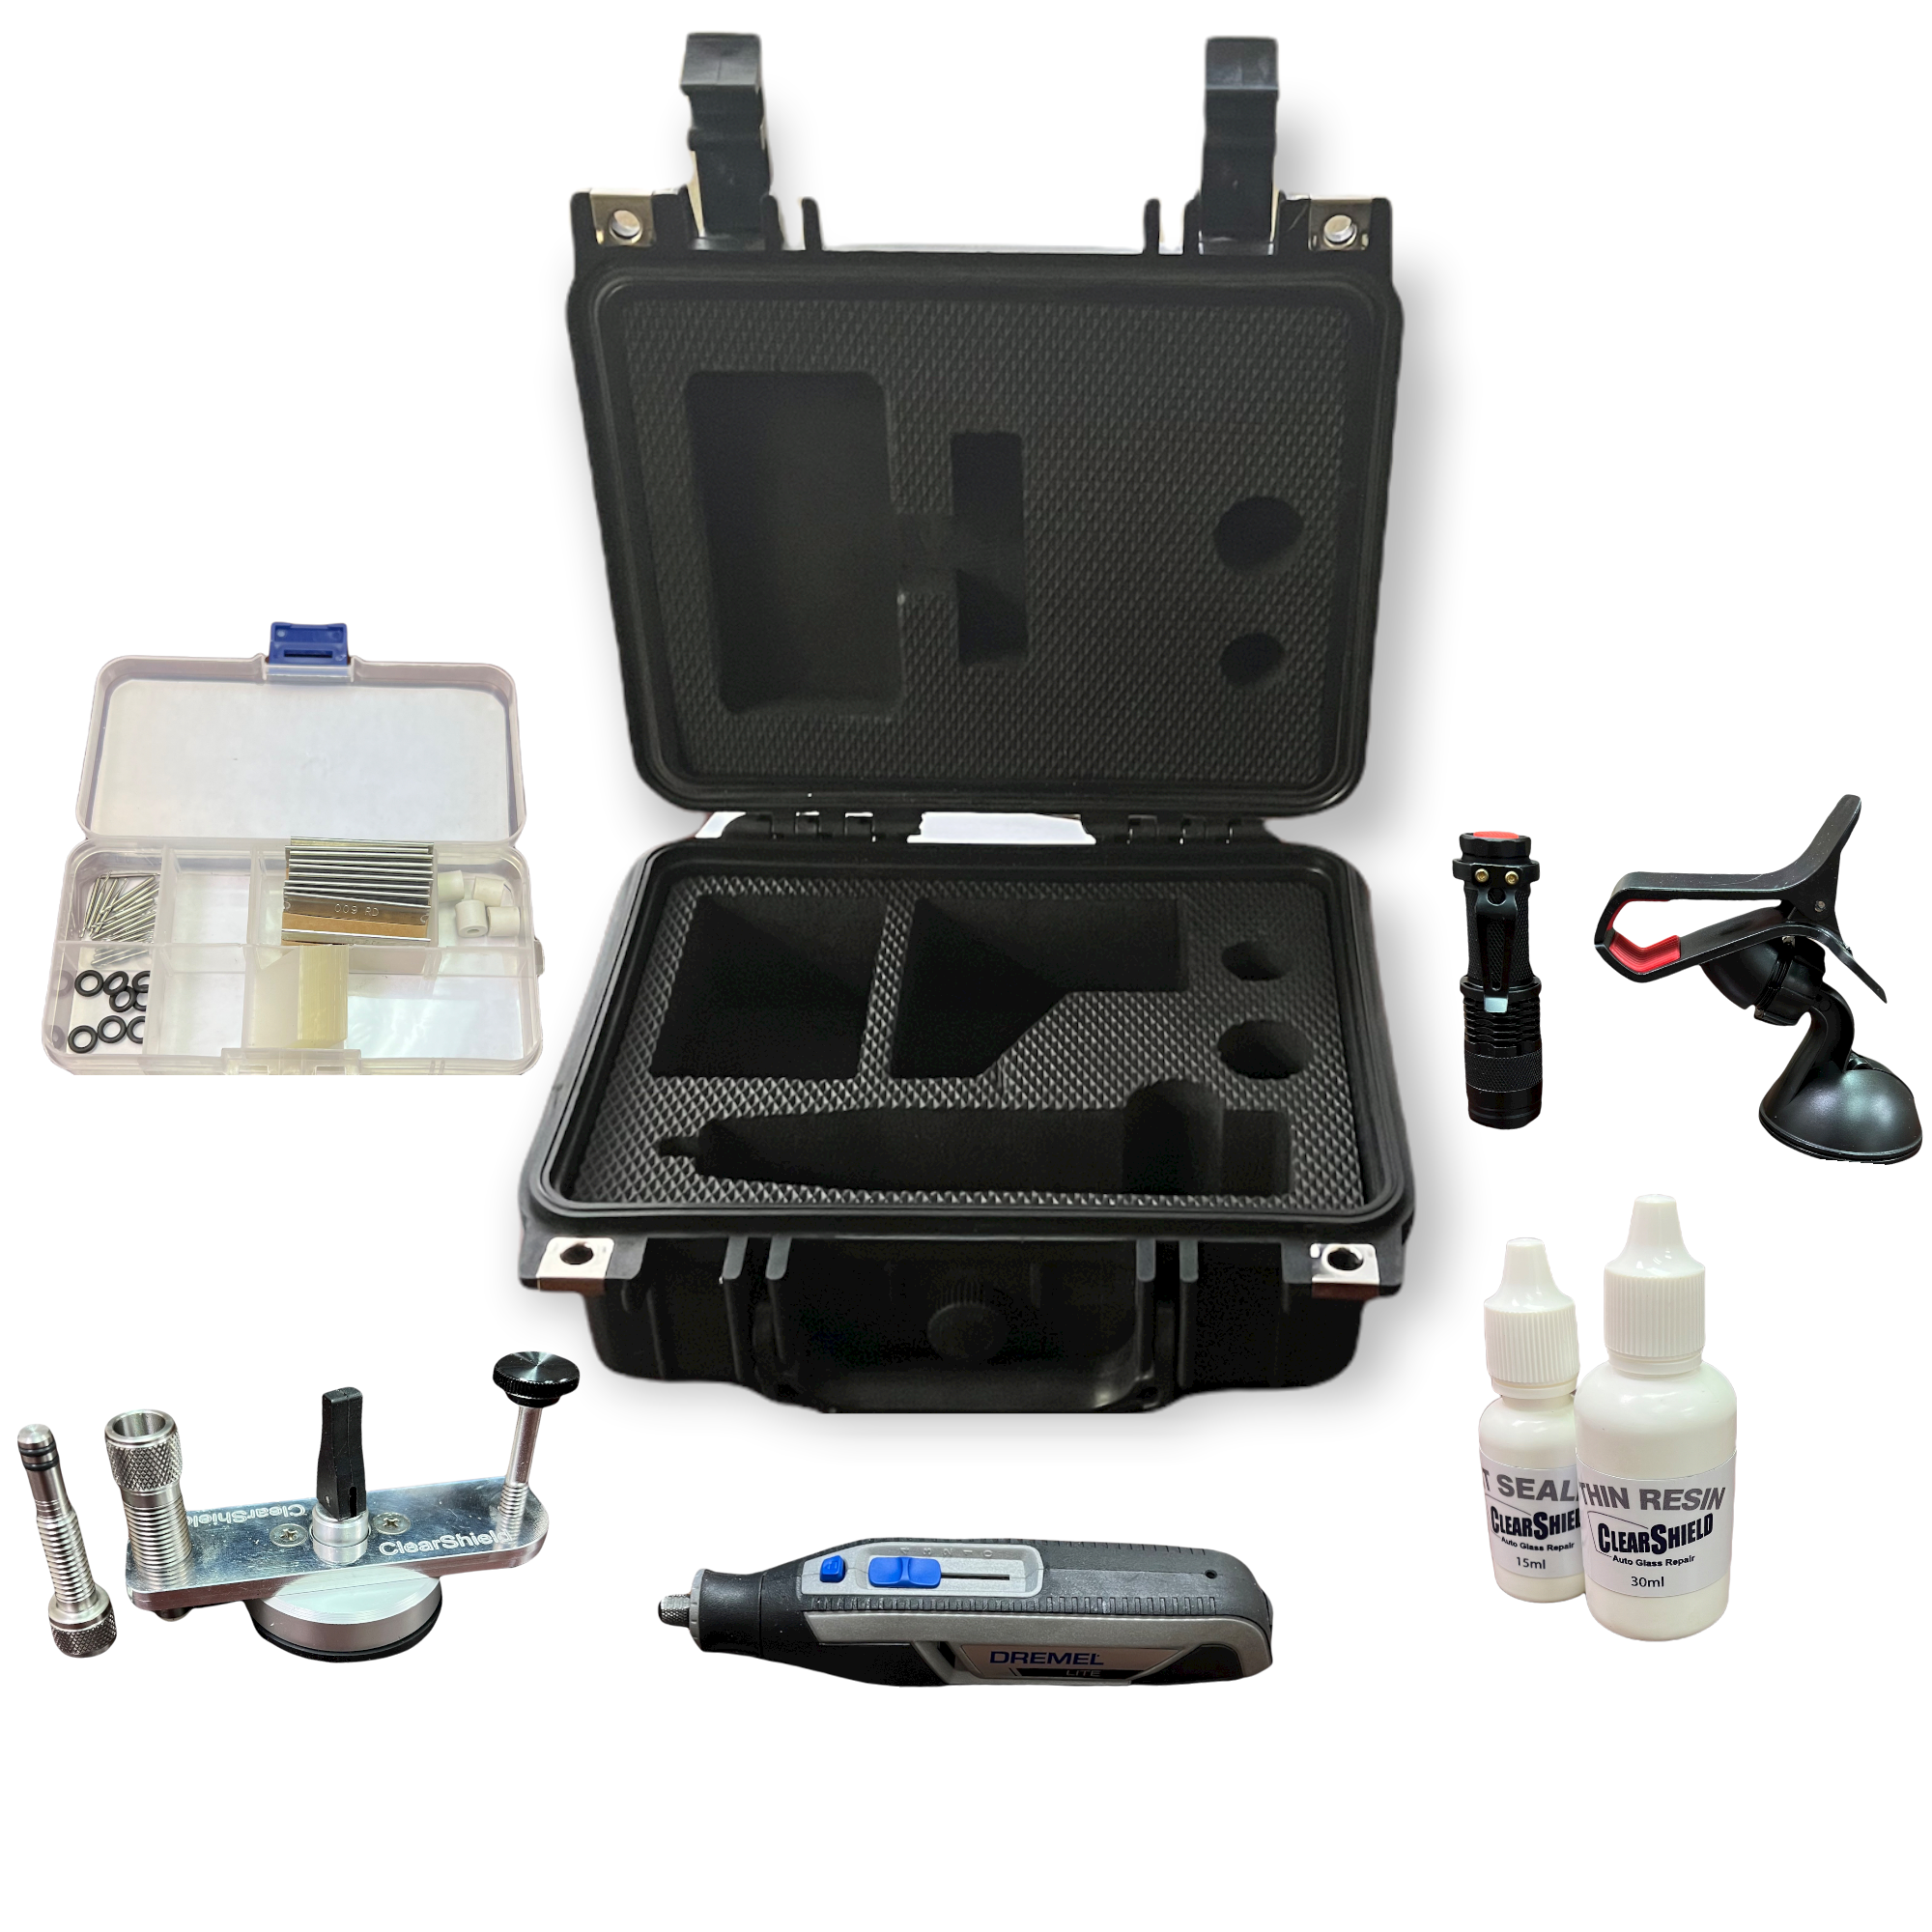 Windshield Crack Repair Kit, Window Glass Repair Kit, Automotive Fluid Glass  Filler Vehicle Windscreen Tool Air Pump Type